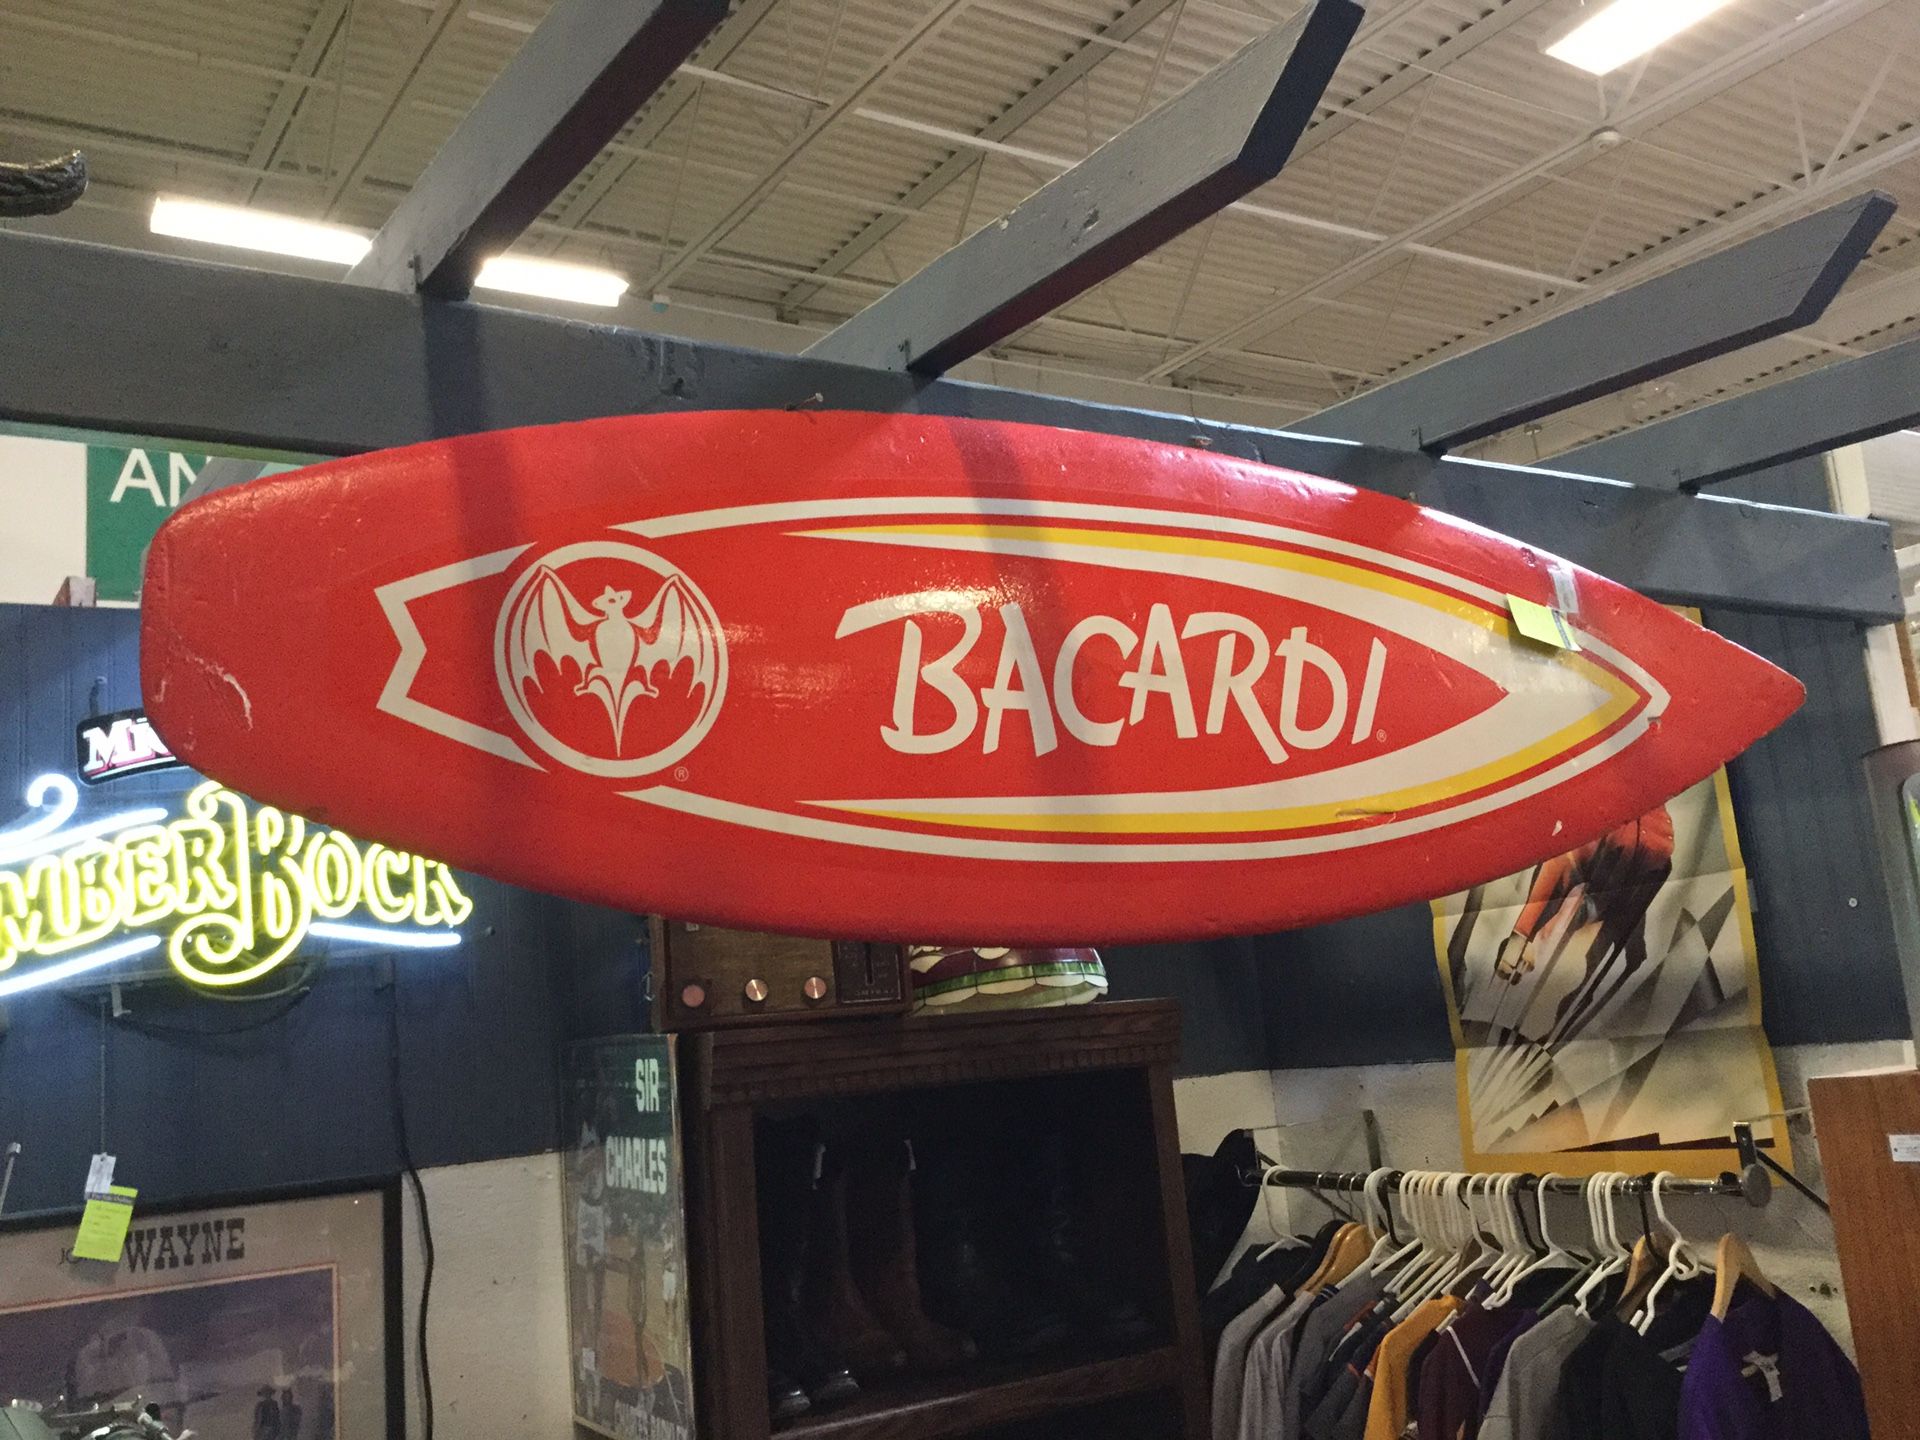 Bacardi advertising foam surfboard sign 65”